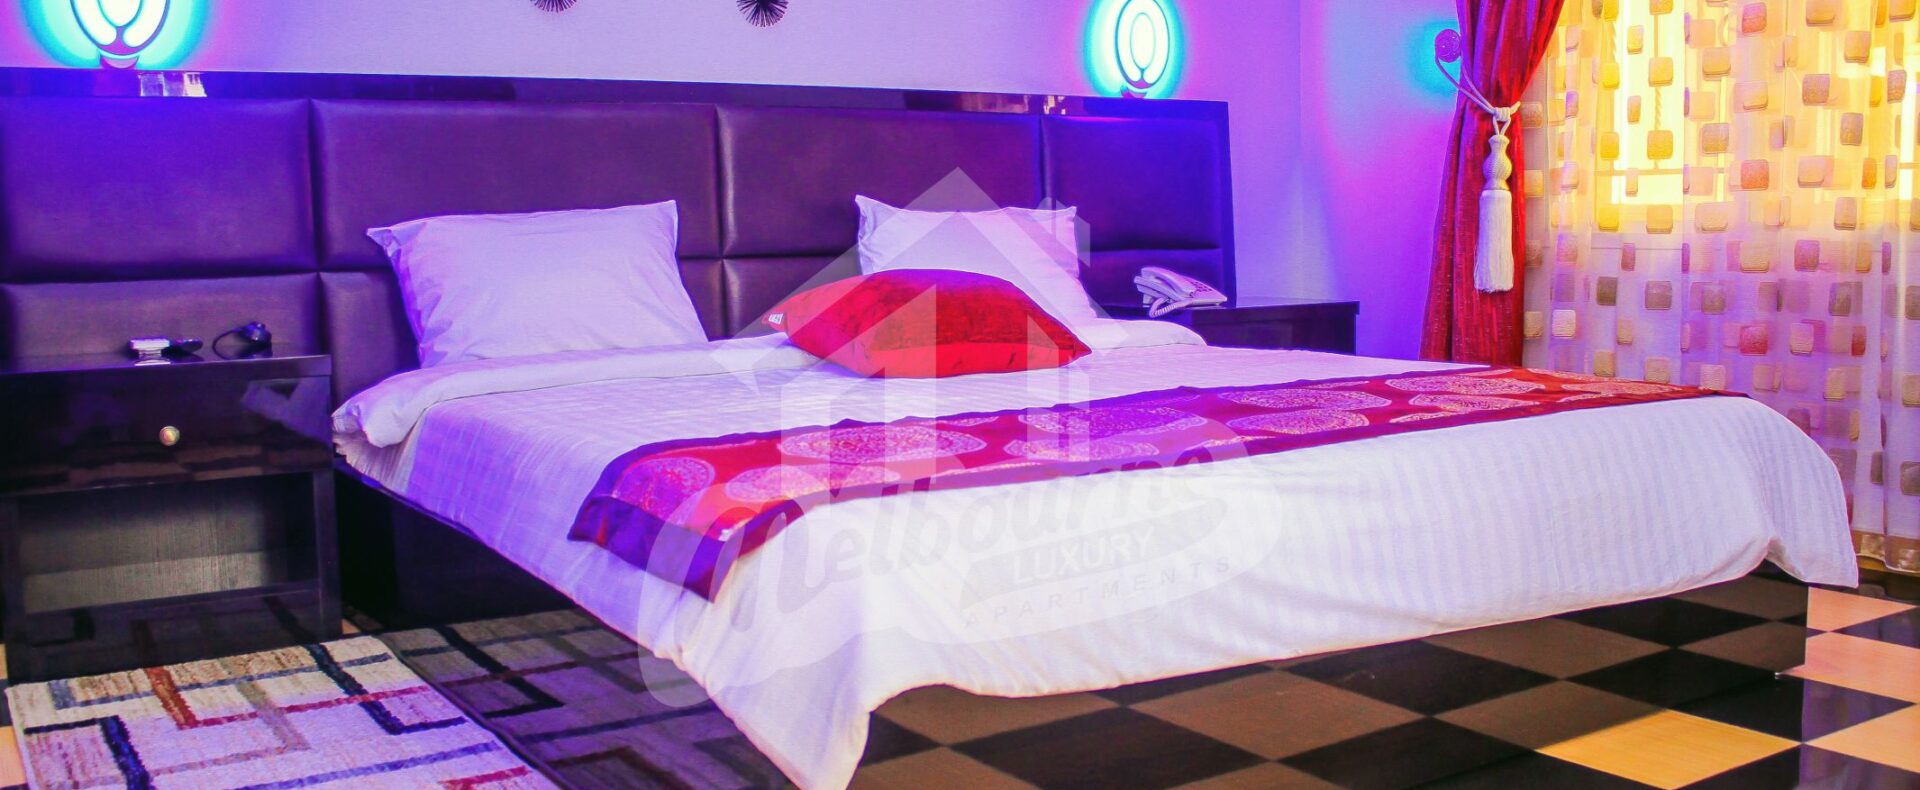 6 Bedroom Apartment For Shortlet In Ikeja Nigeria